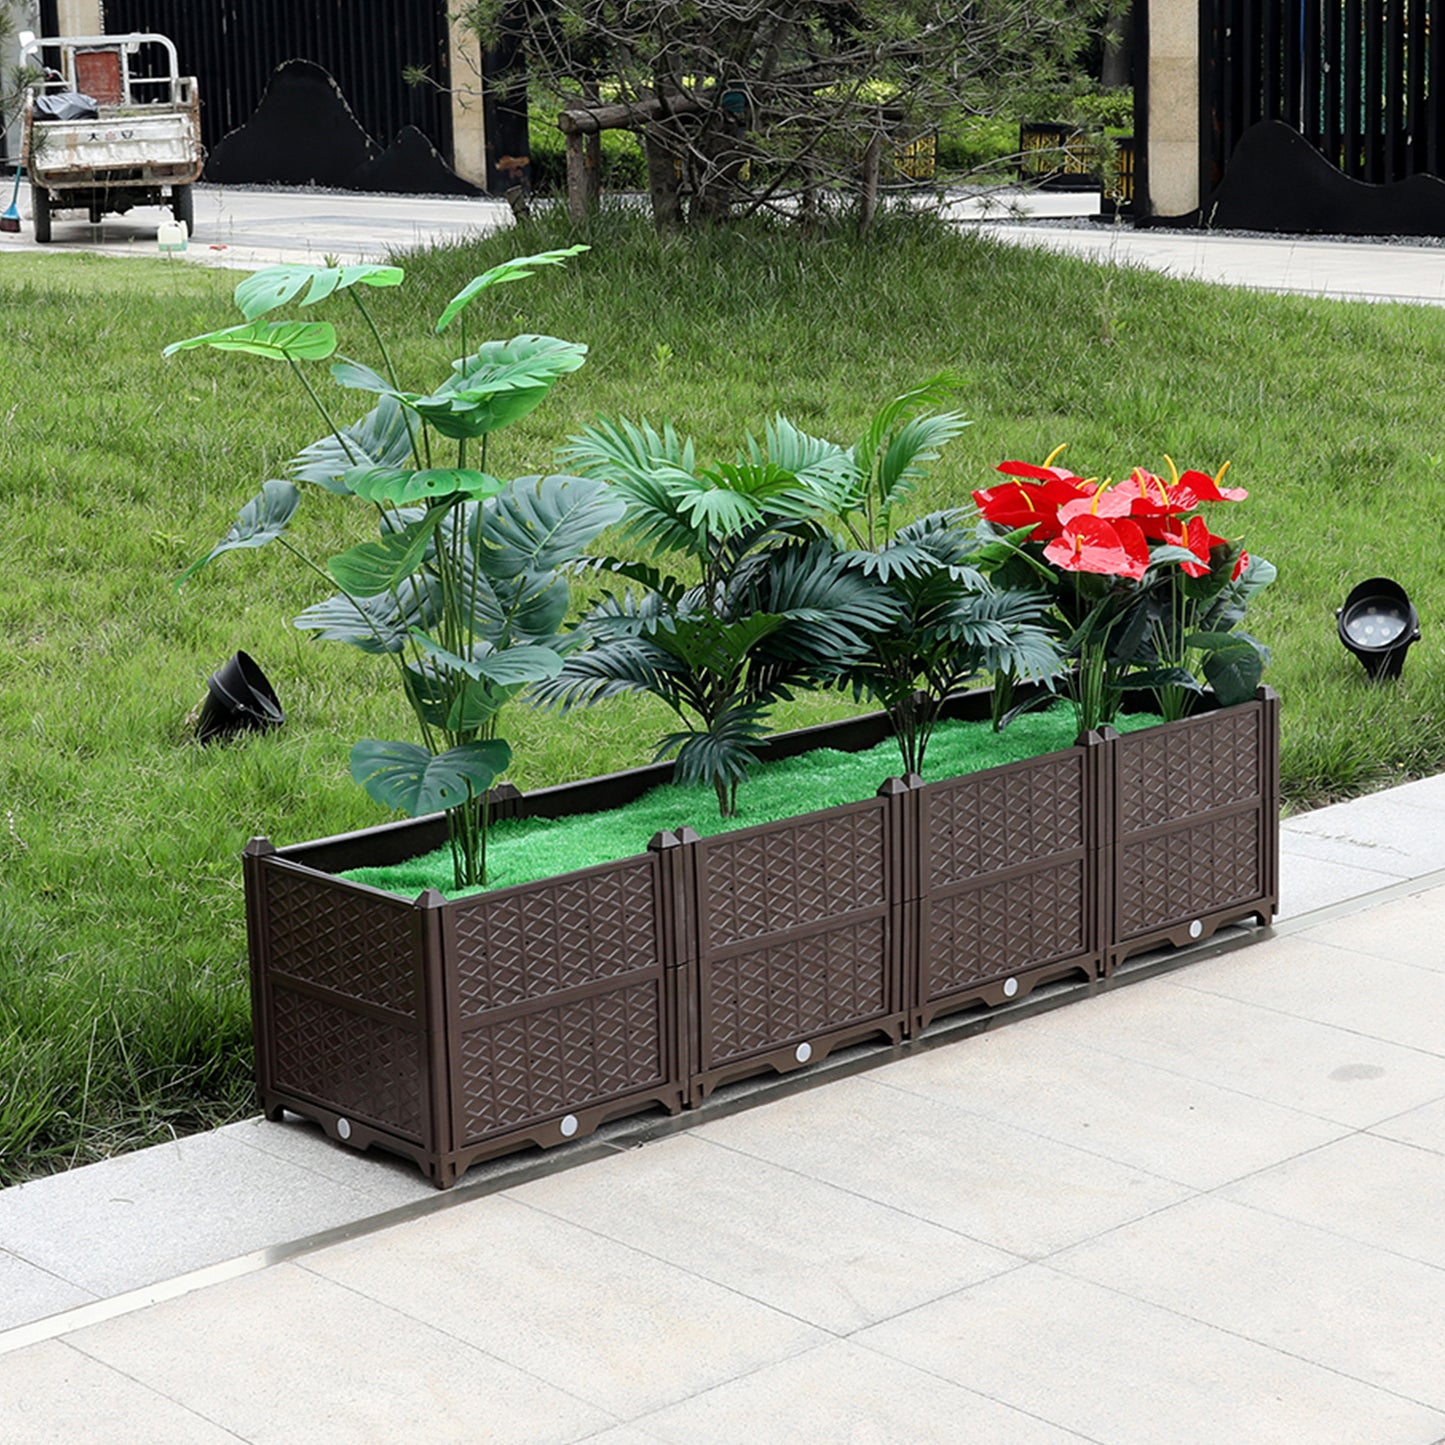 Rectangular Raised Garden Bed Kit Indoor Outdoor Plastic Planter Grow Box for Fresh Vegetables, Herbs, Flowers & Succulents, Brown